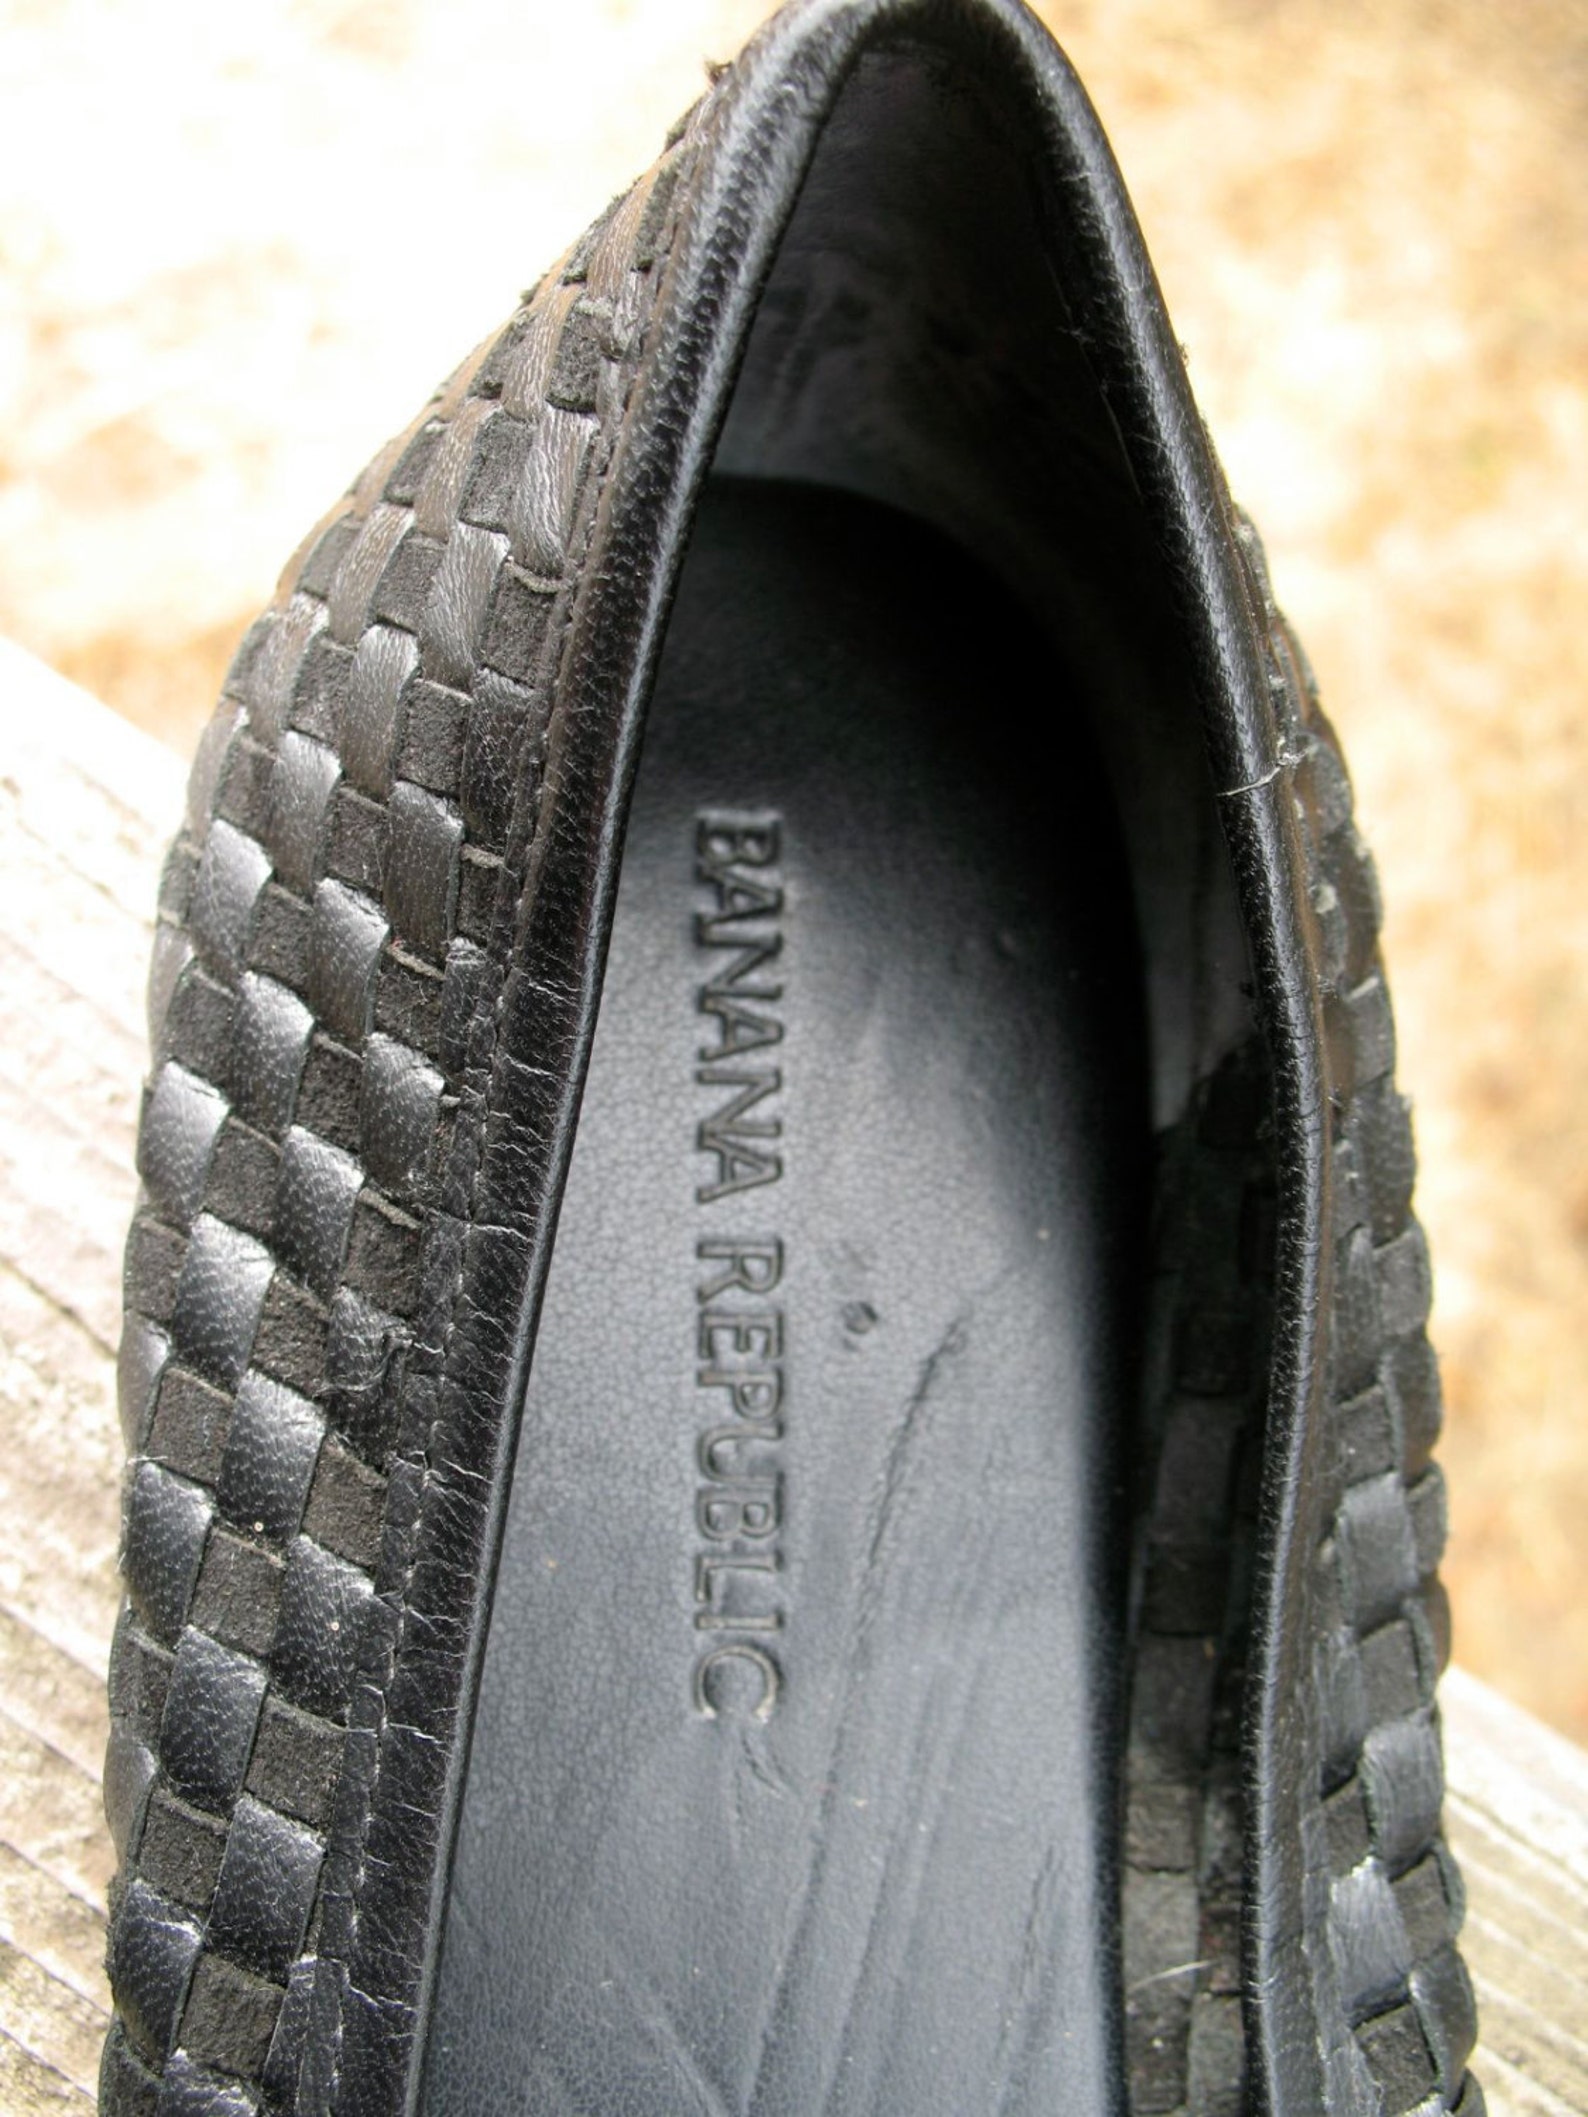 banana republic black woven leather ballet shoes audrey hepburn style size 7 1 /2 m